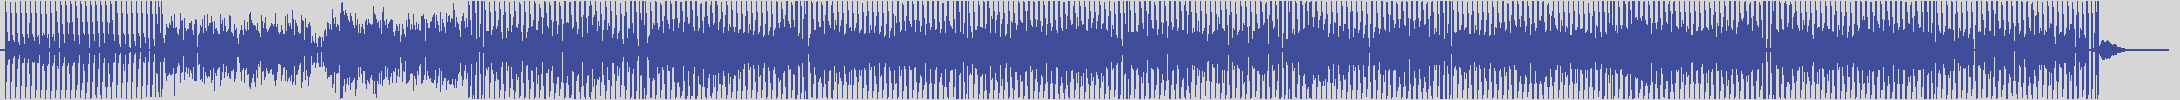 nf_boyz_records [NFY038] Franky Mandragora - Thank You [Harbour Lights Mix] audio wave form